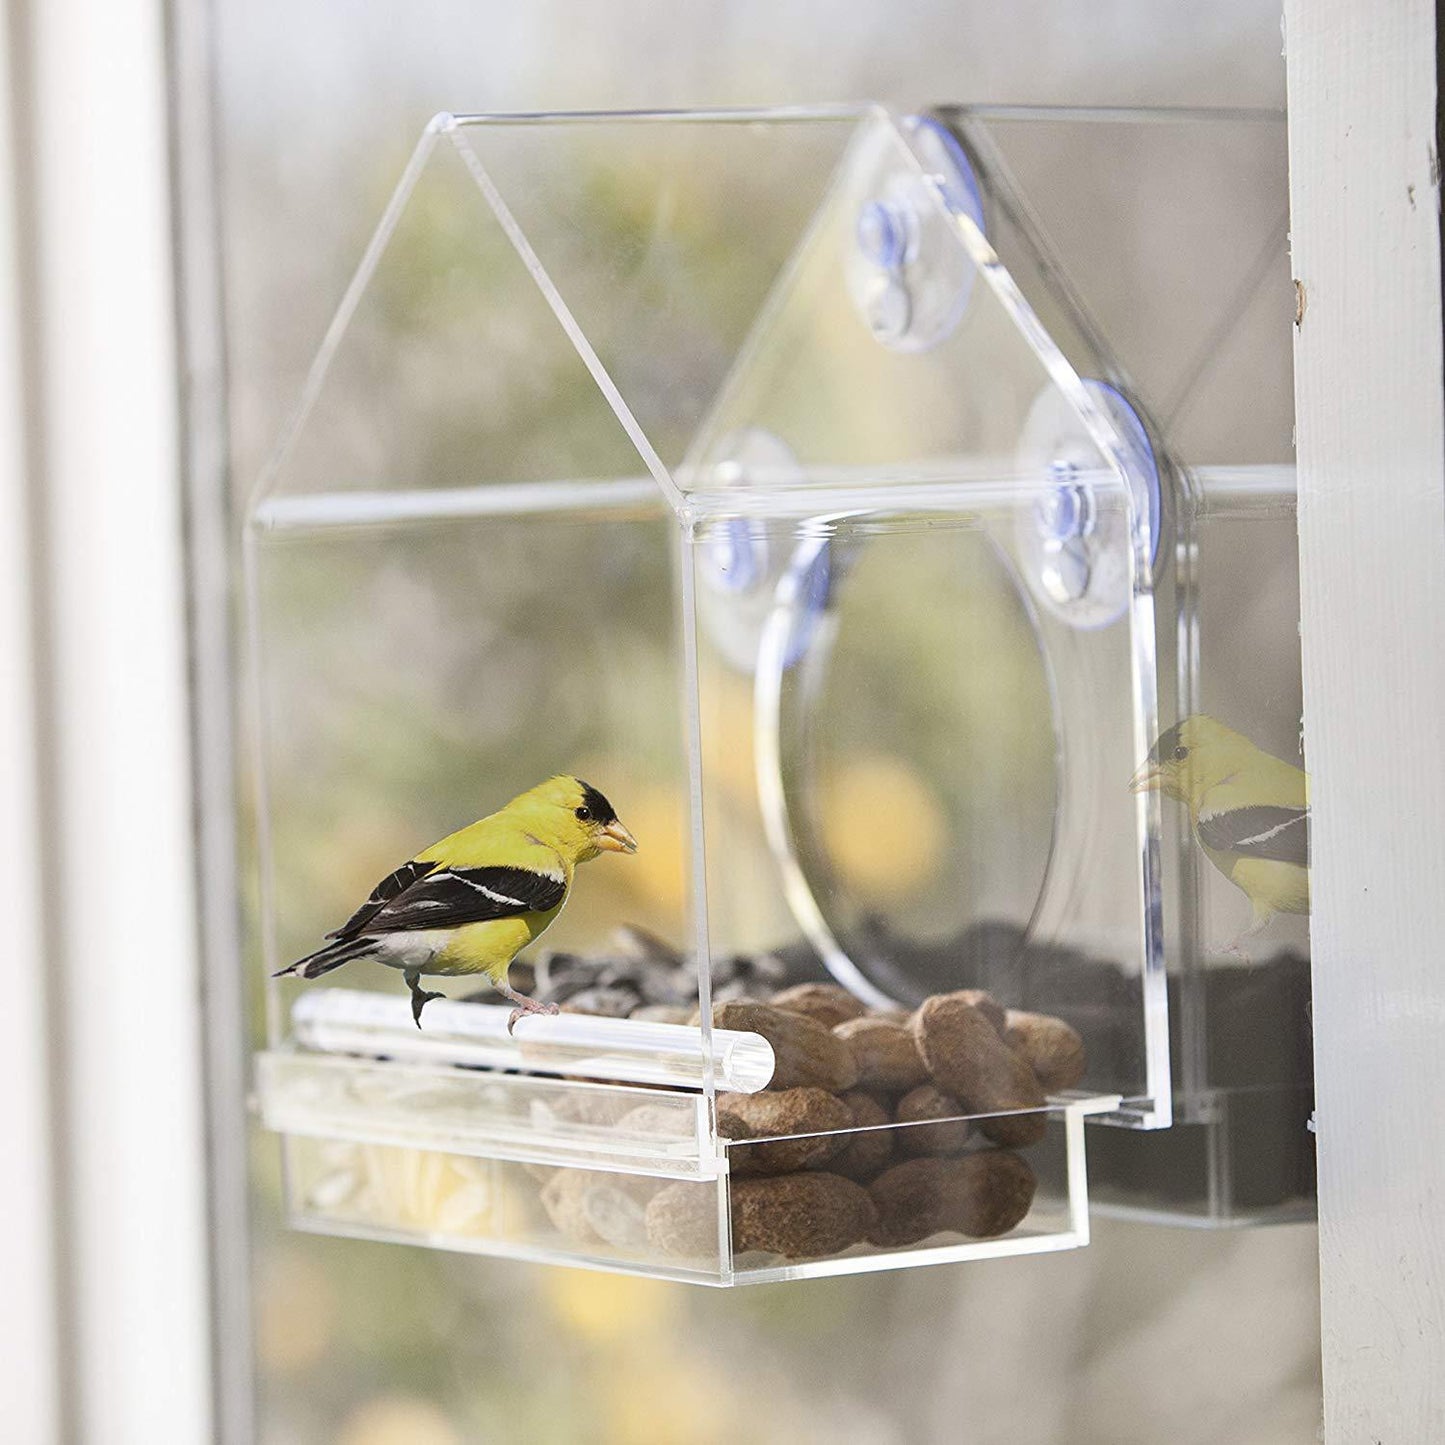 Hängender Acrylvogelfutterautomat Transparenter Acrylvogelkäfig.//Hanging Acrylic Bird Feeder Transparent Acrylic Bird Cage